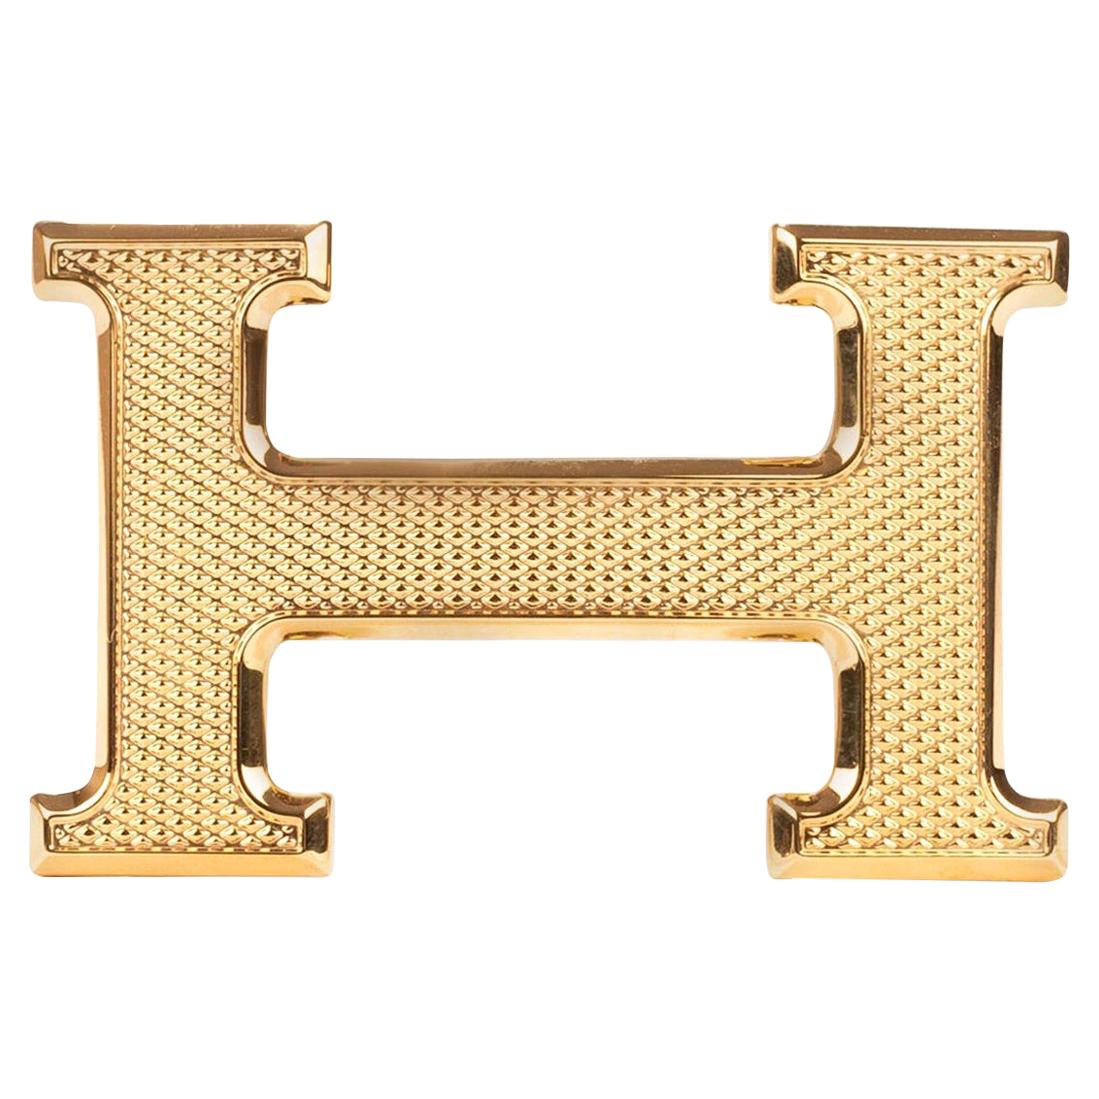 Brand new Hermès "Guillochée" belt buckle  in shiny gold metal 